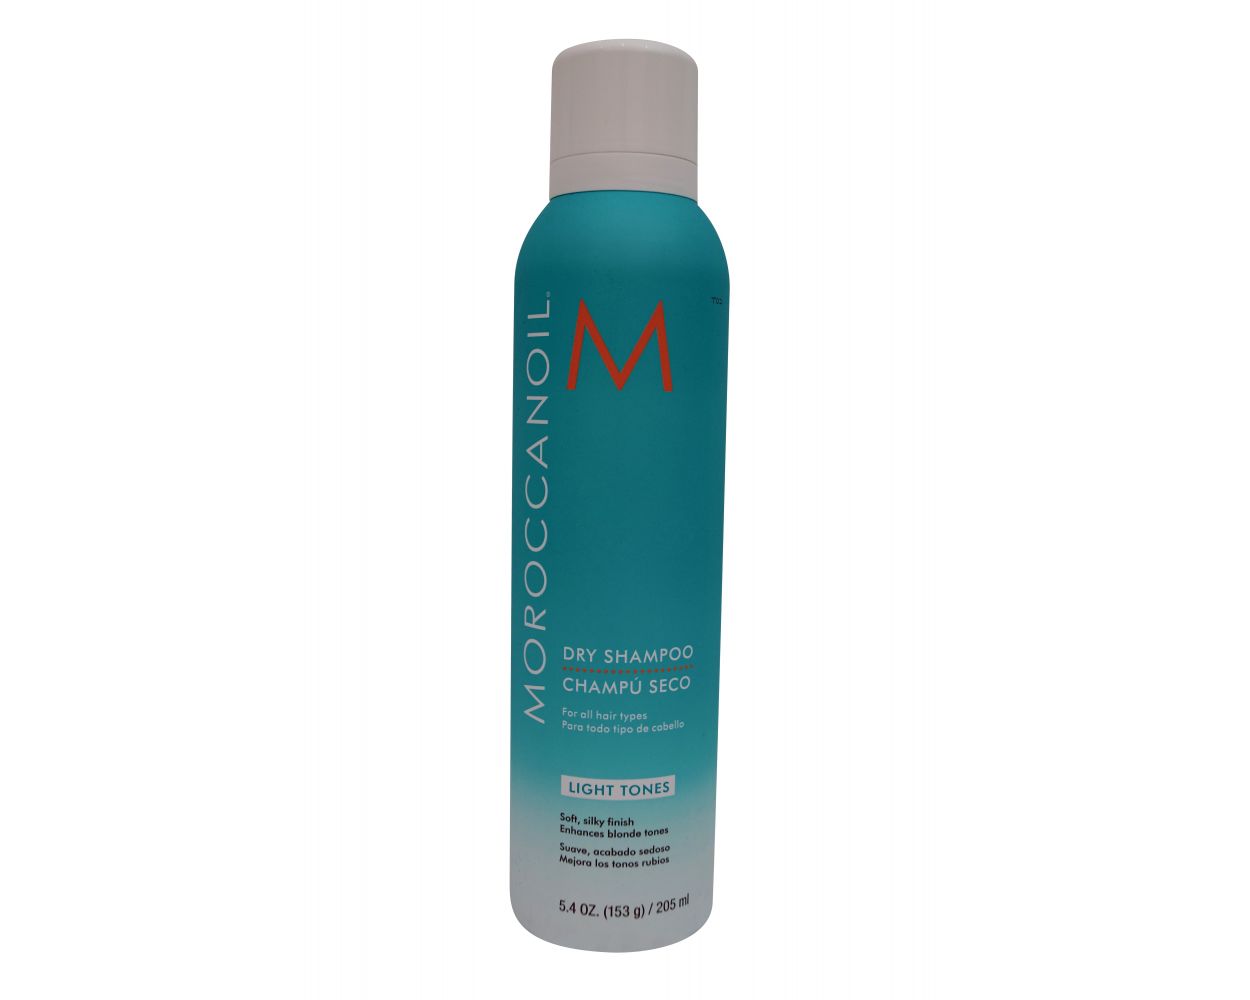 Dry Shampoo Light Tones MOROCCANOIL Champú seco cabellos claros precio